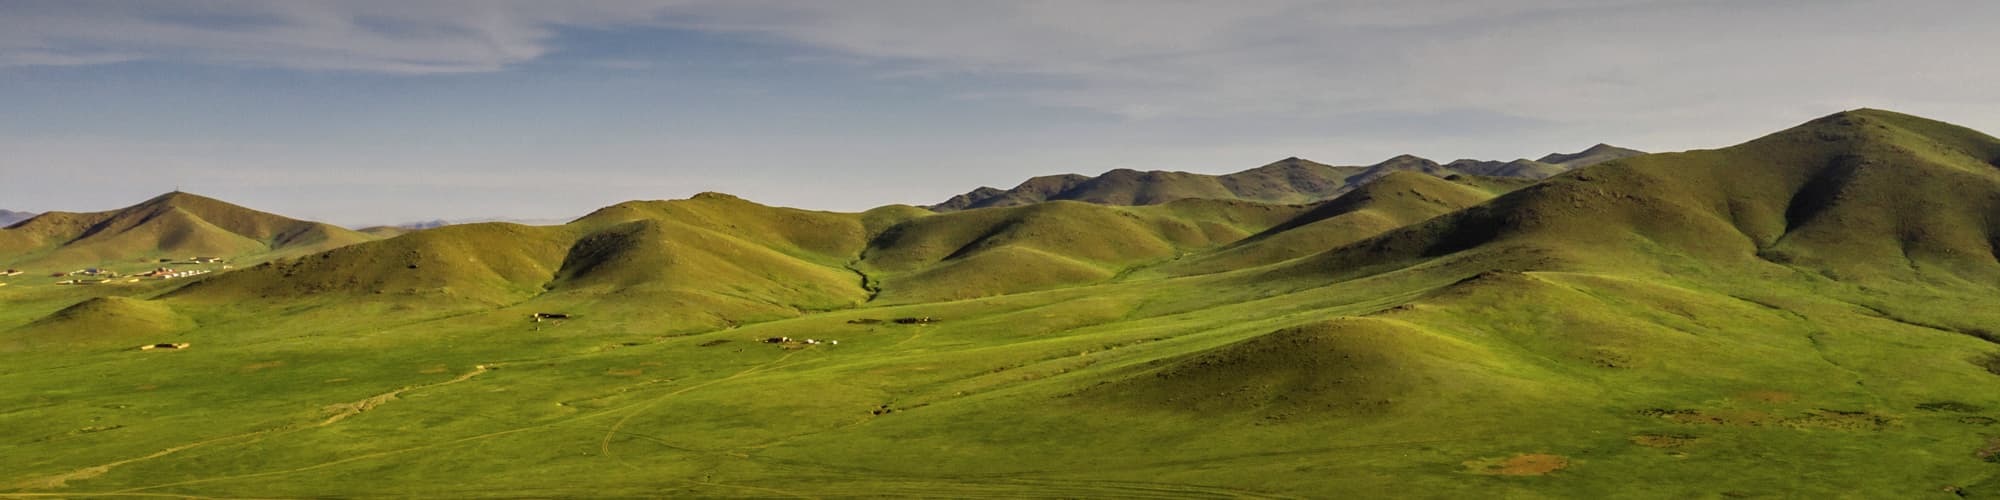 Voyage en groupe Mongolie © Travel Stock / Adobe Stock